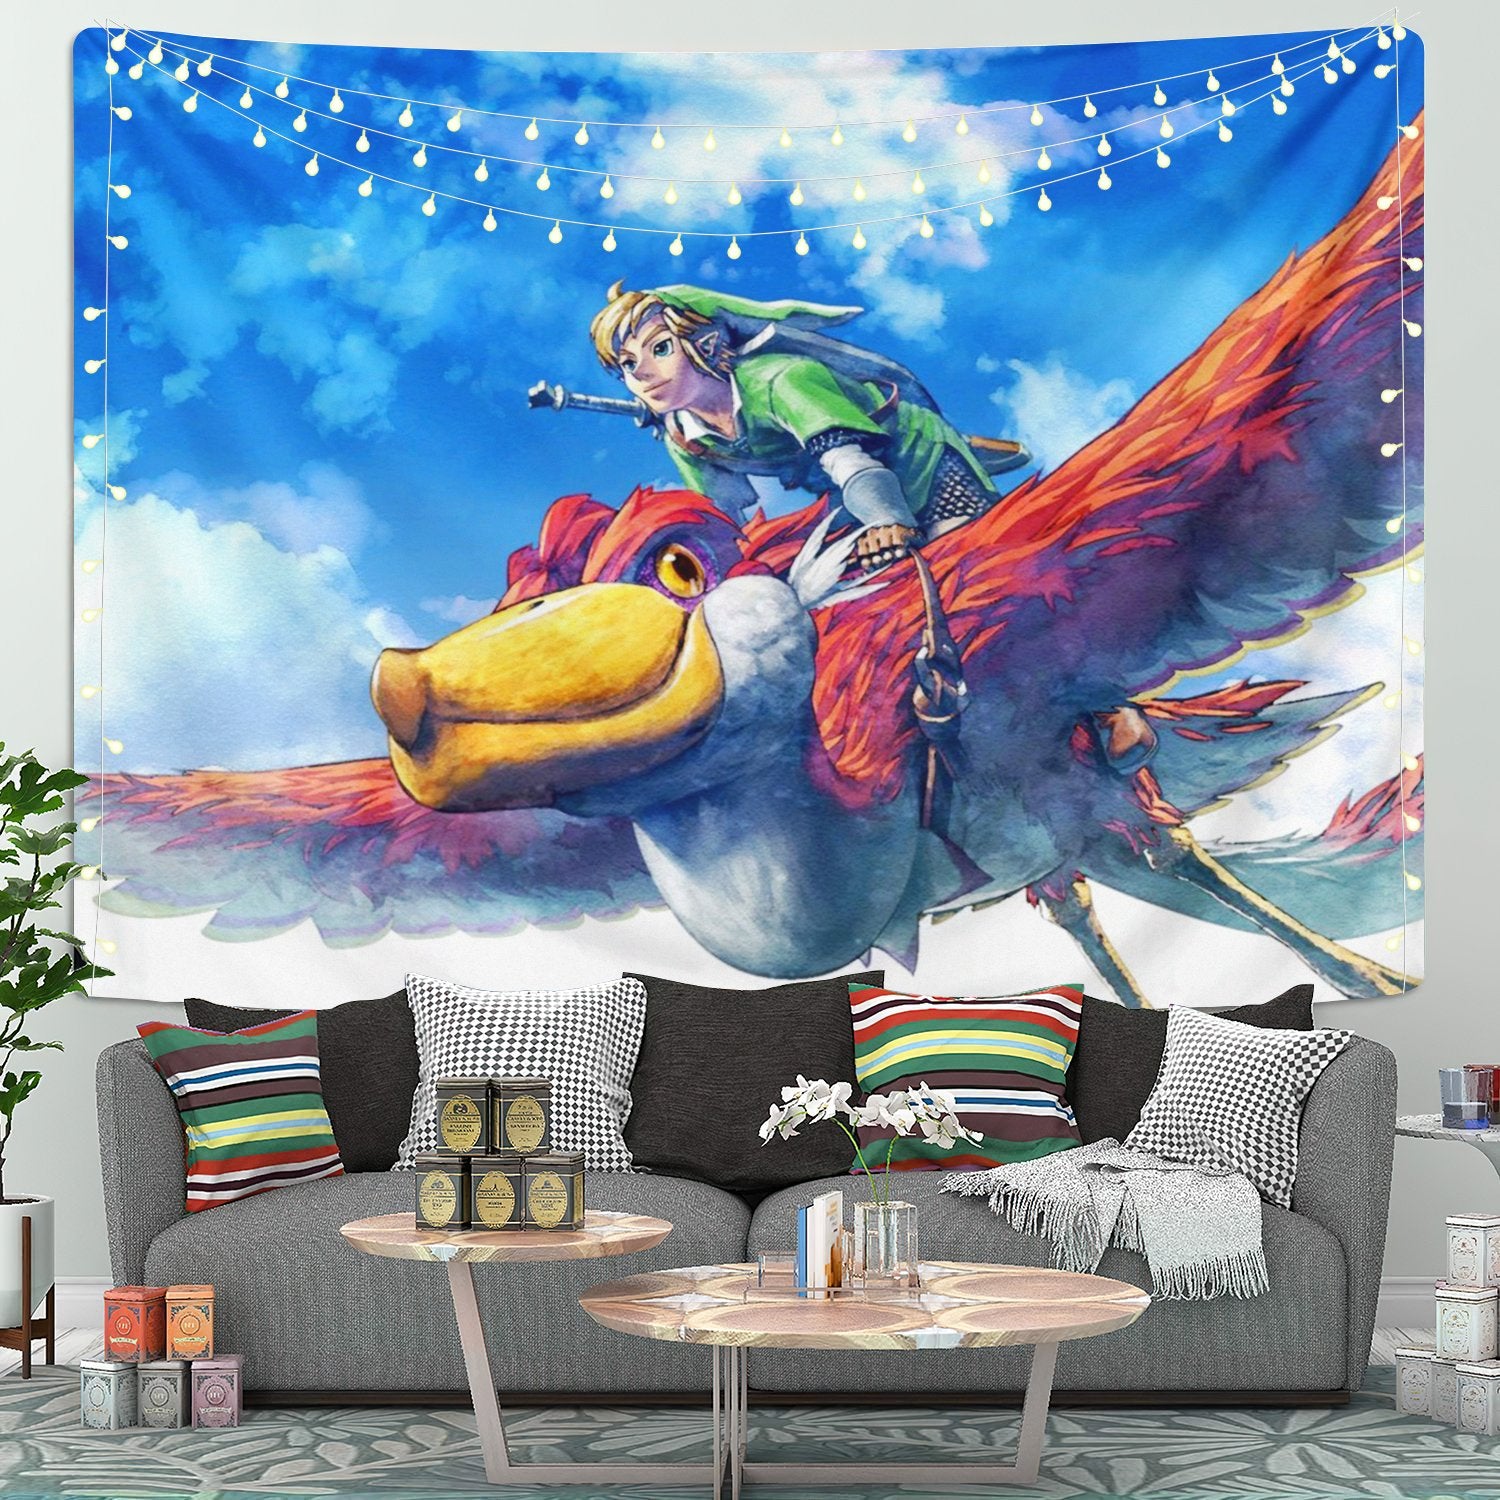 Legend Of Zelda Skyward Sword Tapestry Room Decor